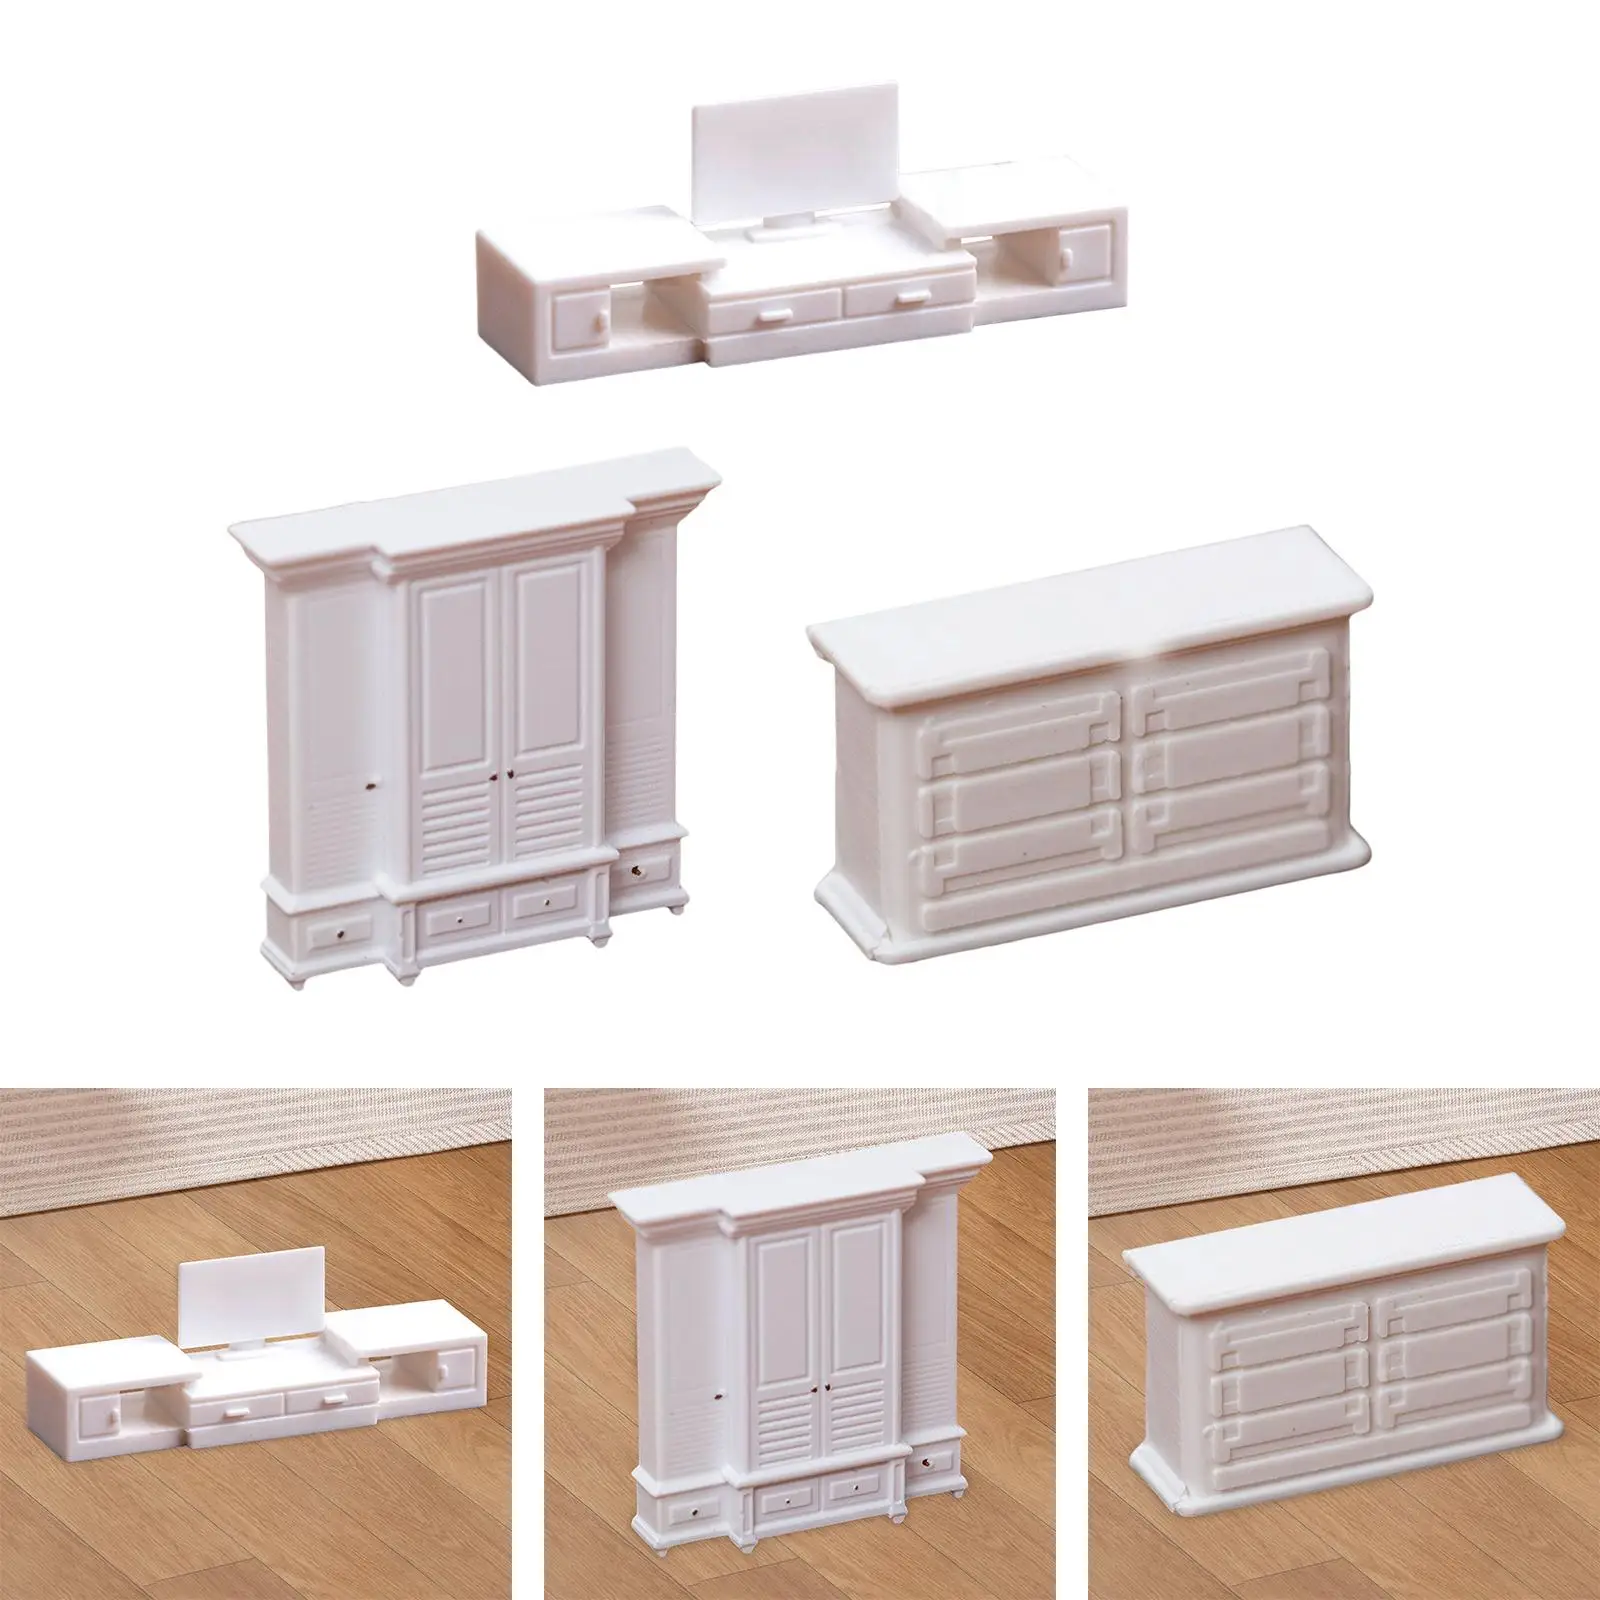 Dollhouse Furniture Realistic Miniature Bedside Table Mini Furniture Model for Photo Props DIY Scene Ornament Diorama Layout